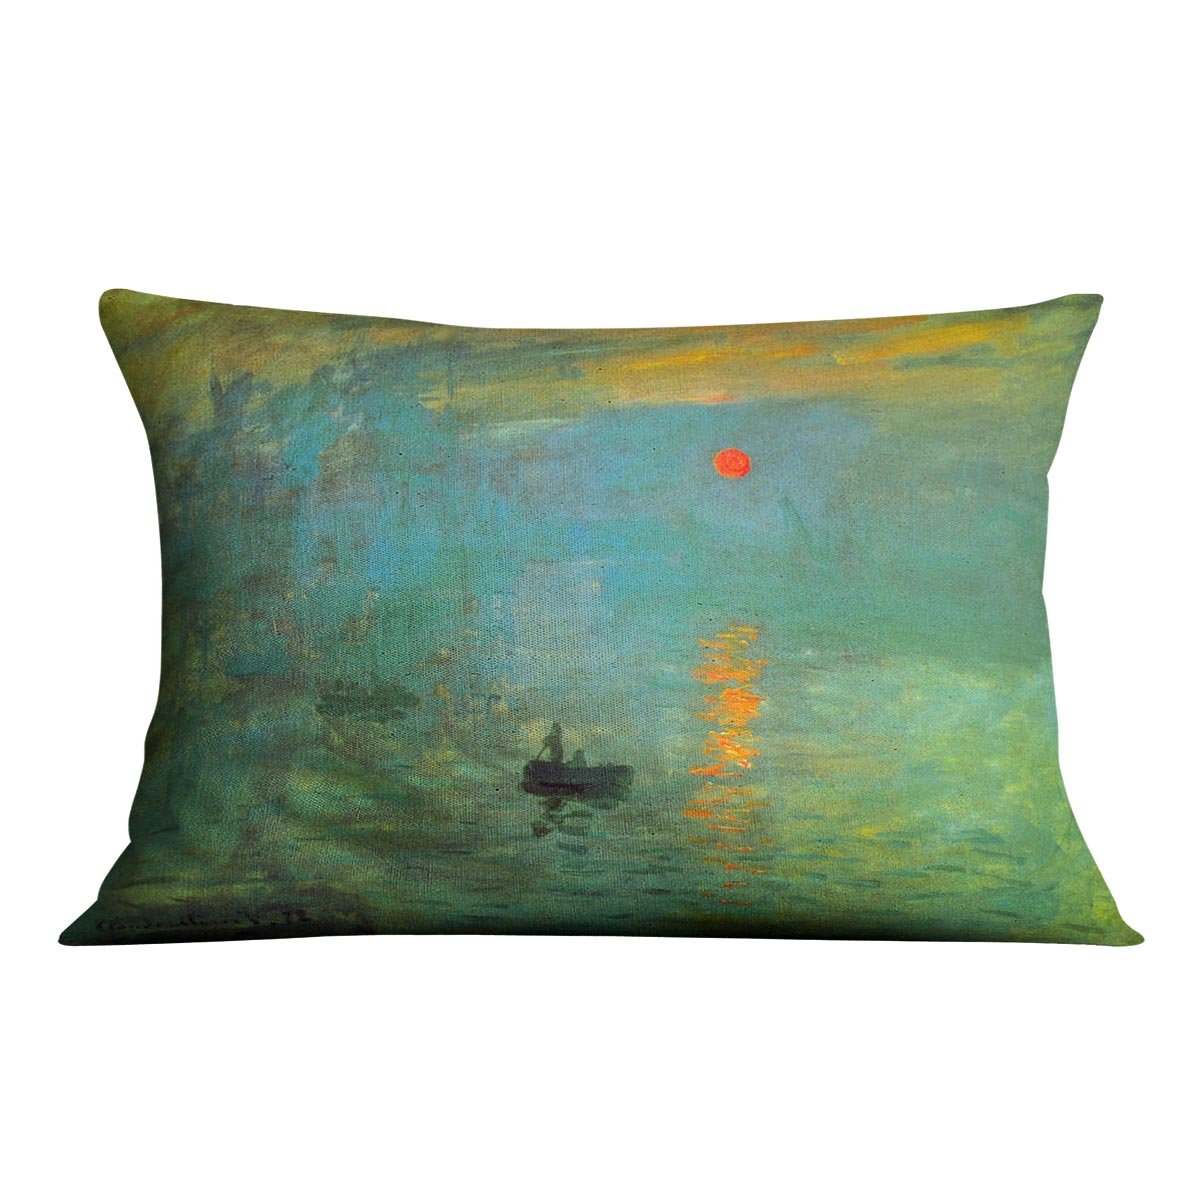 Sunrise by Monet Throw Pillow